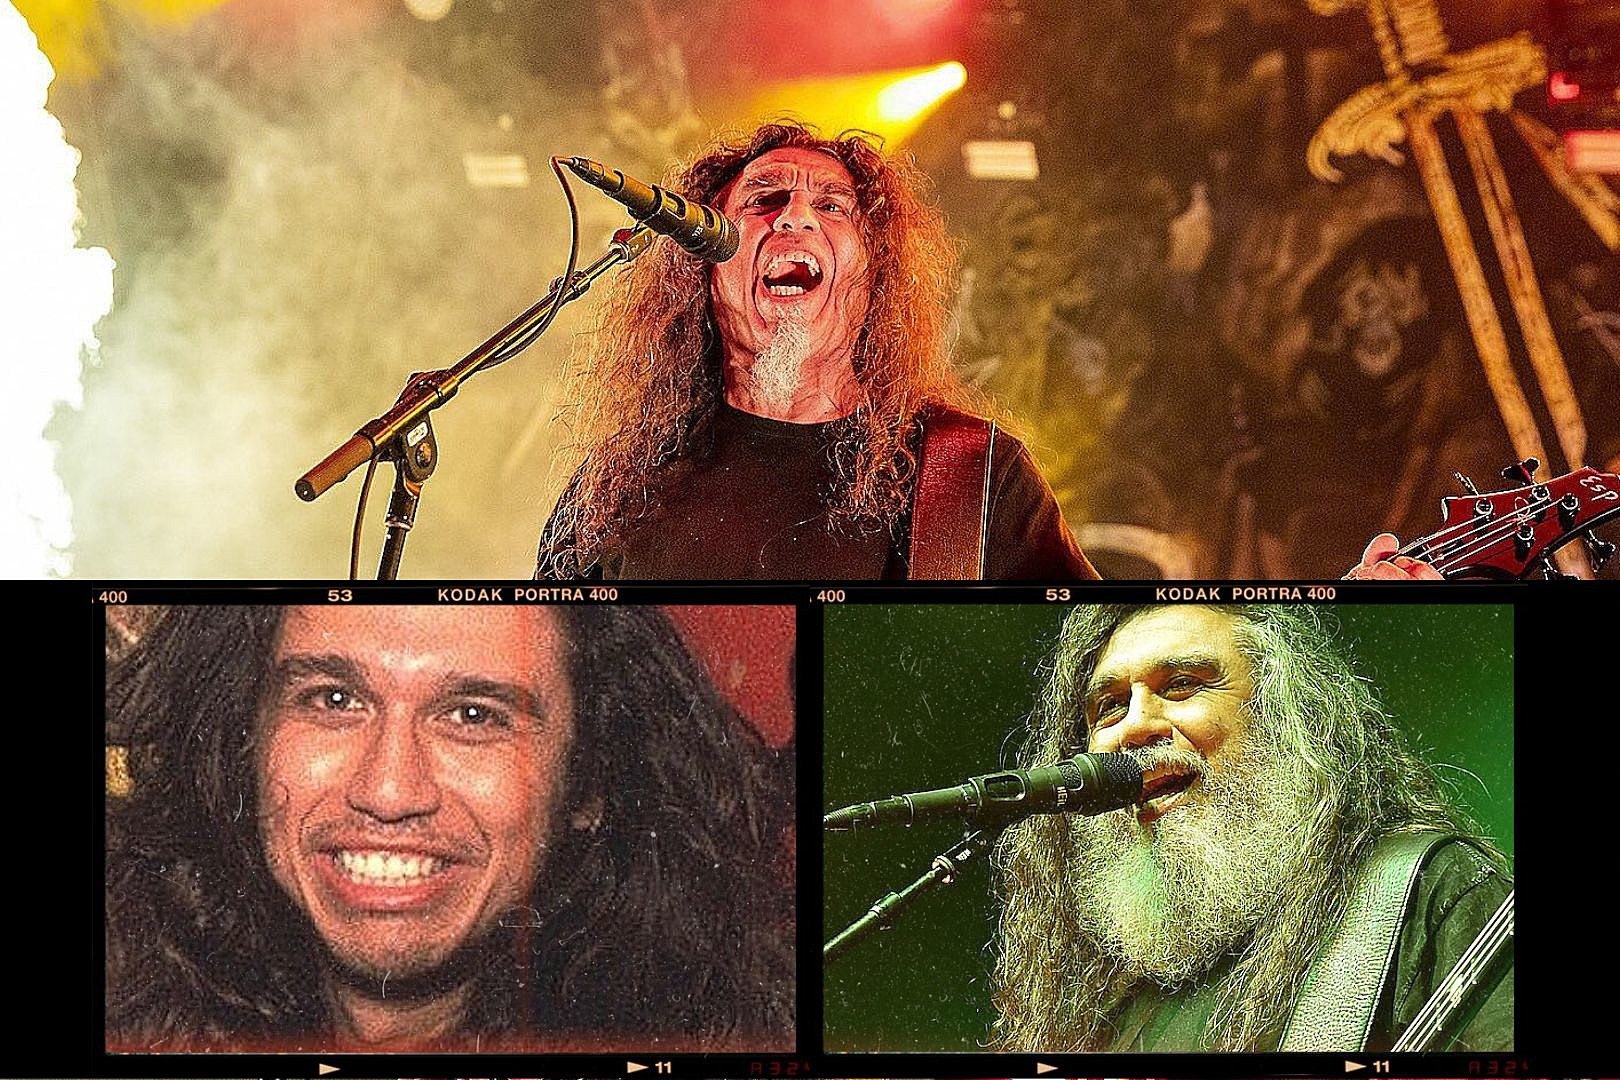 See Photos of Slayer's Tom Araya Through the Years